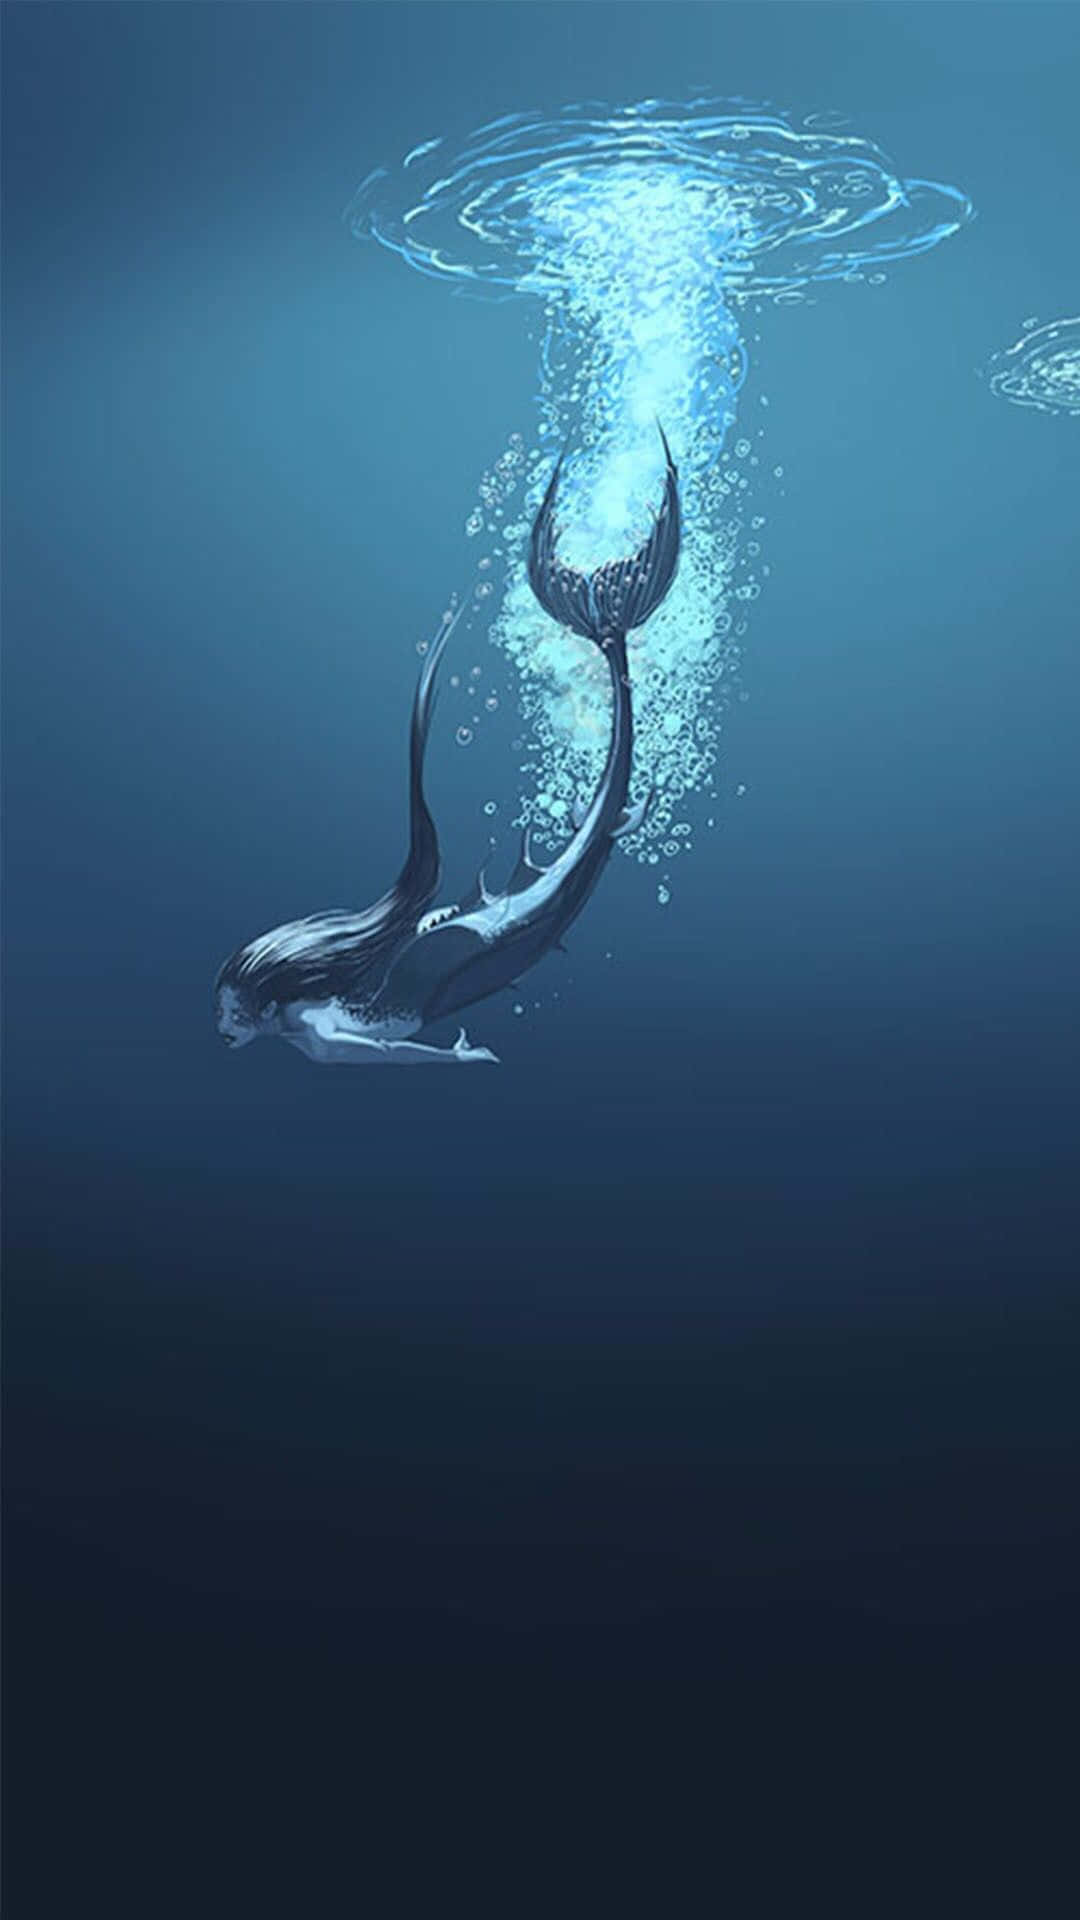 Download Mermaid In The Vast Ocean Wallpaper | Wallpapers.com